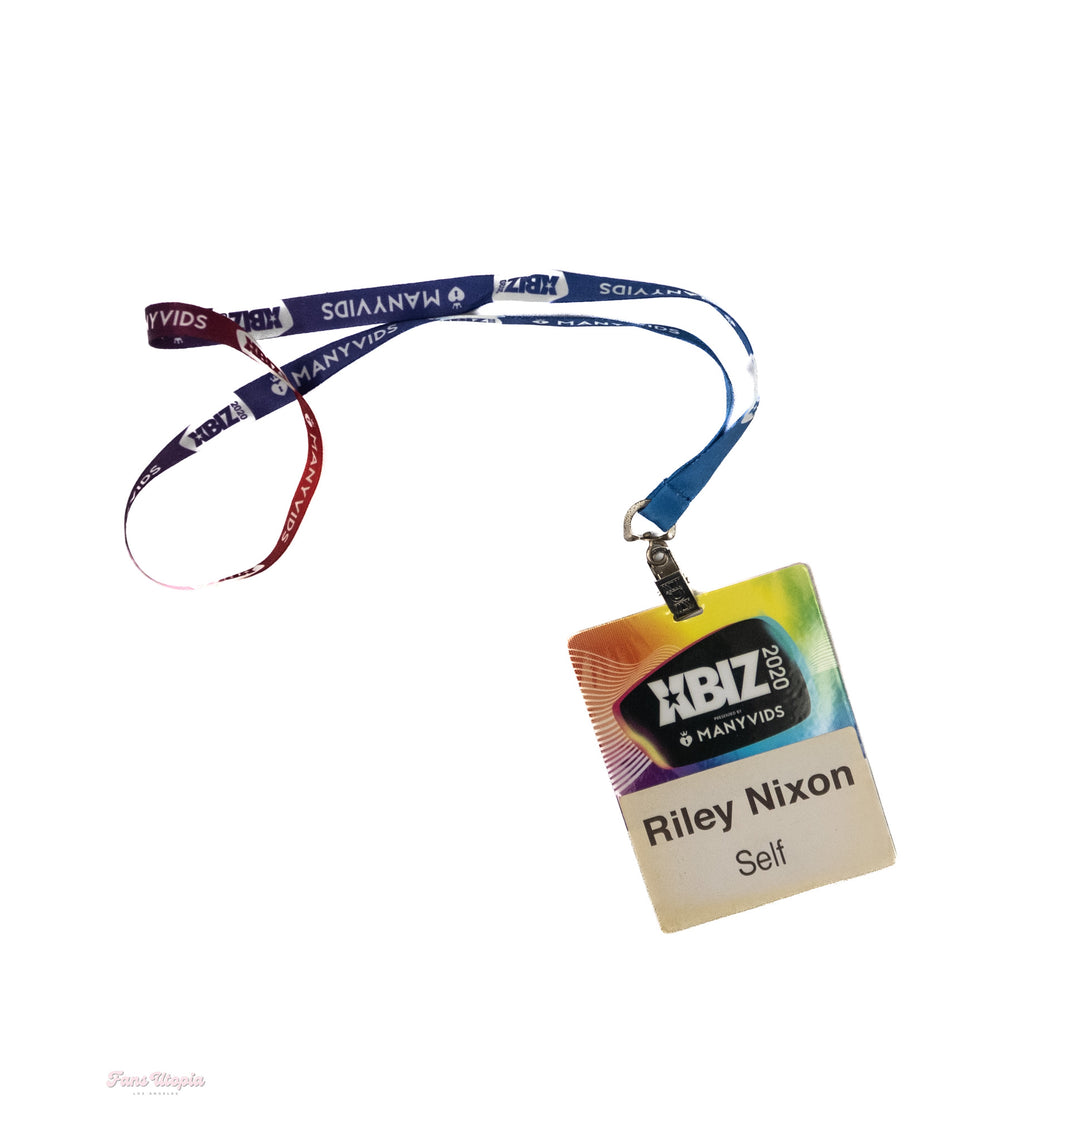 Riley Nixon 2020 Xbiz Convention Pass